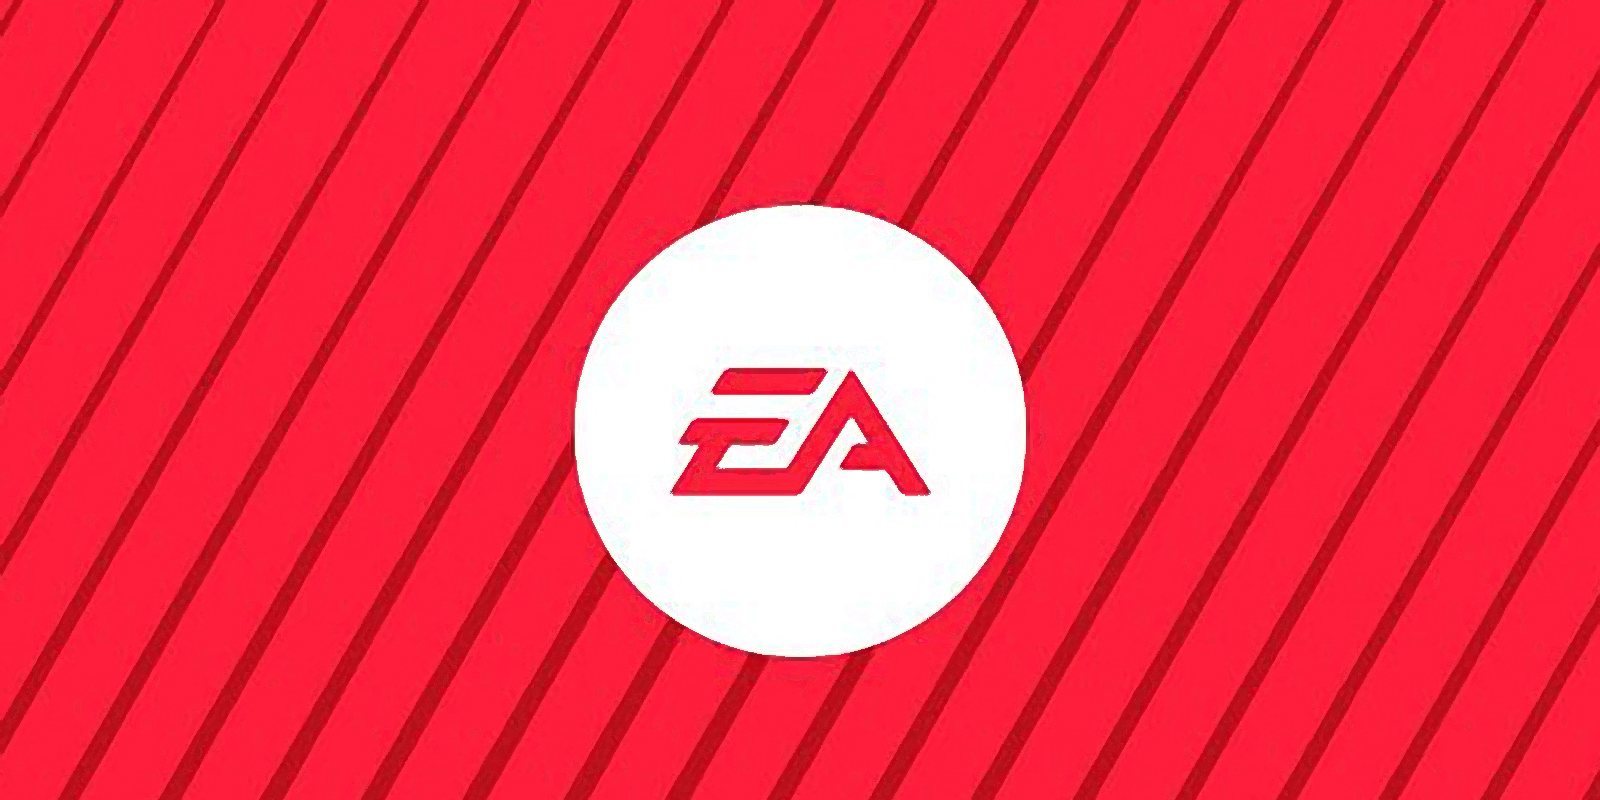 Directo E3 2018: Conferencia Electronic Arts